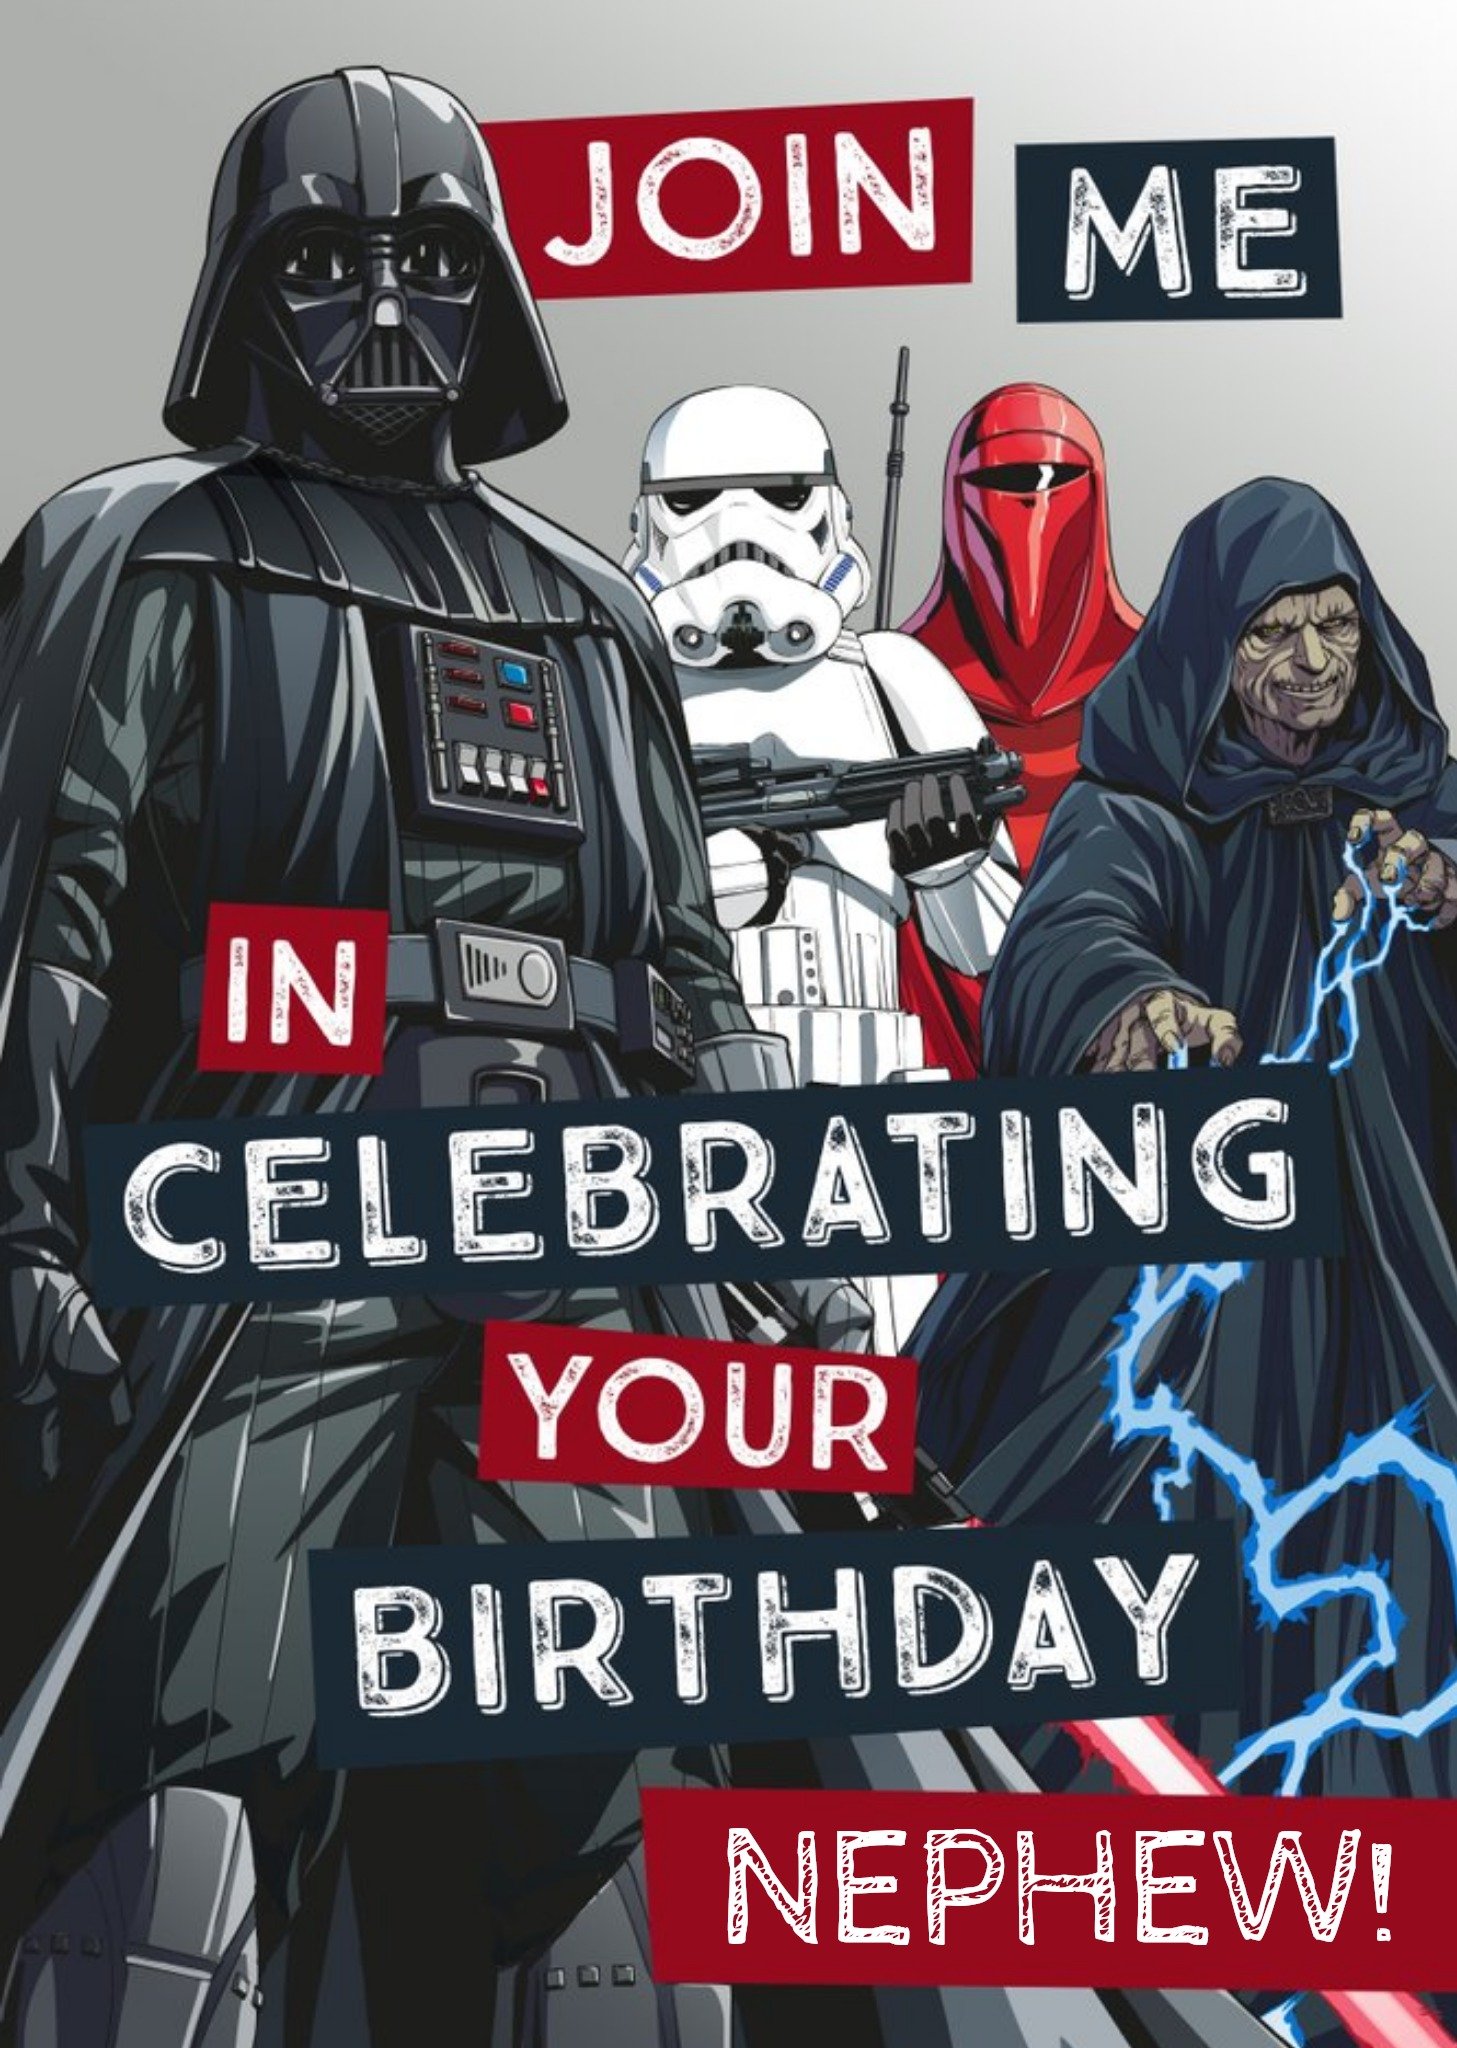 Disney Star Wars Nephew Birthday Card - Sith - Darth Vader Ecard